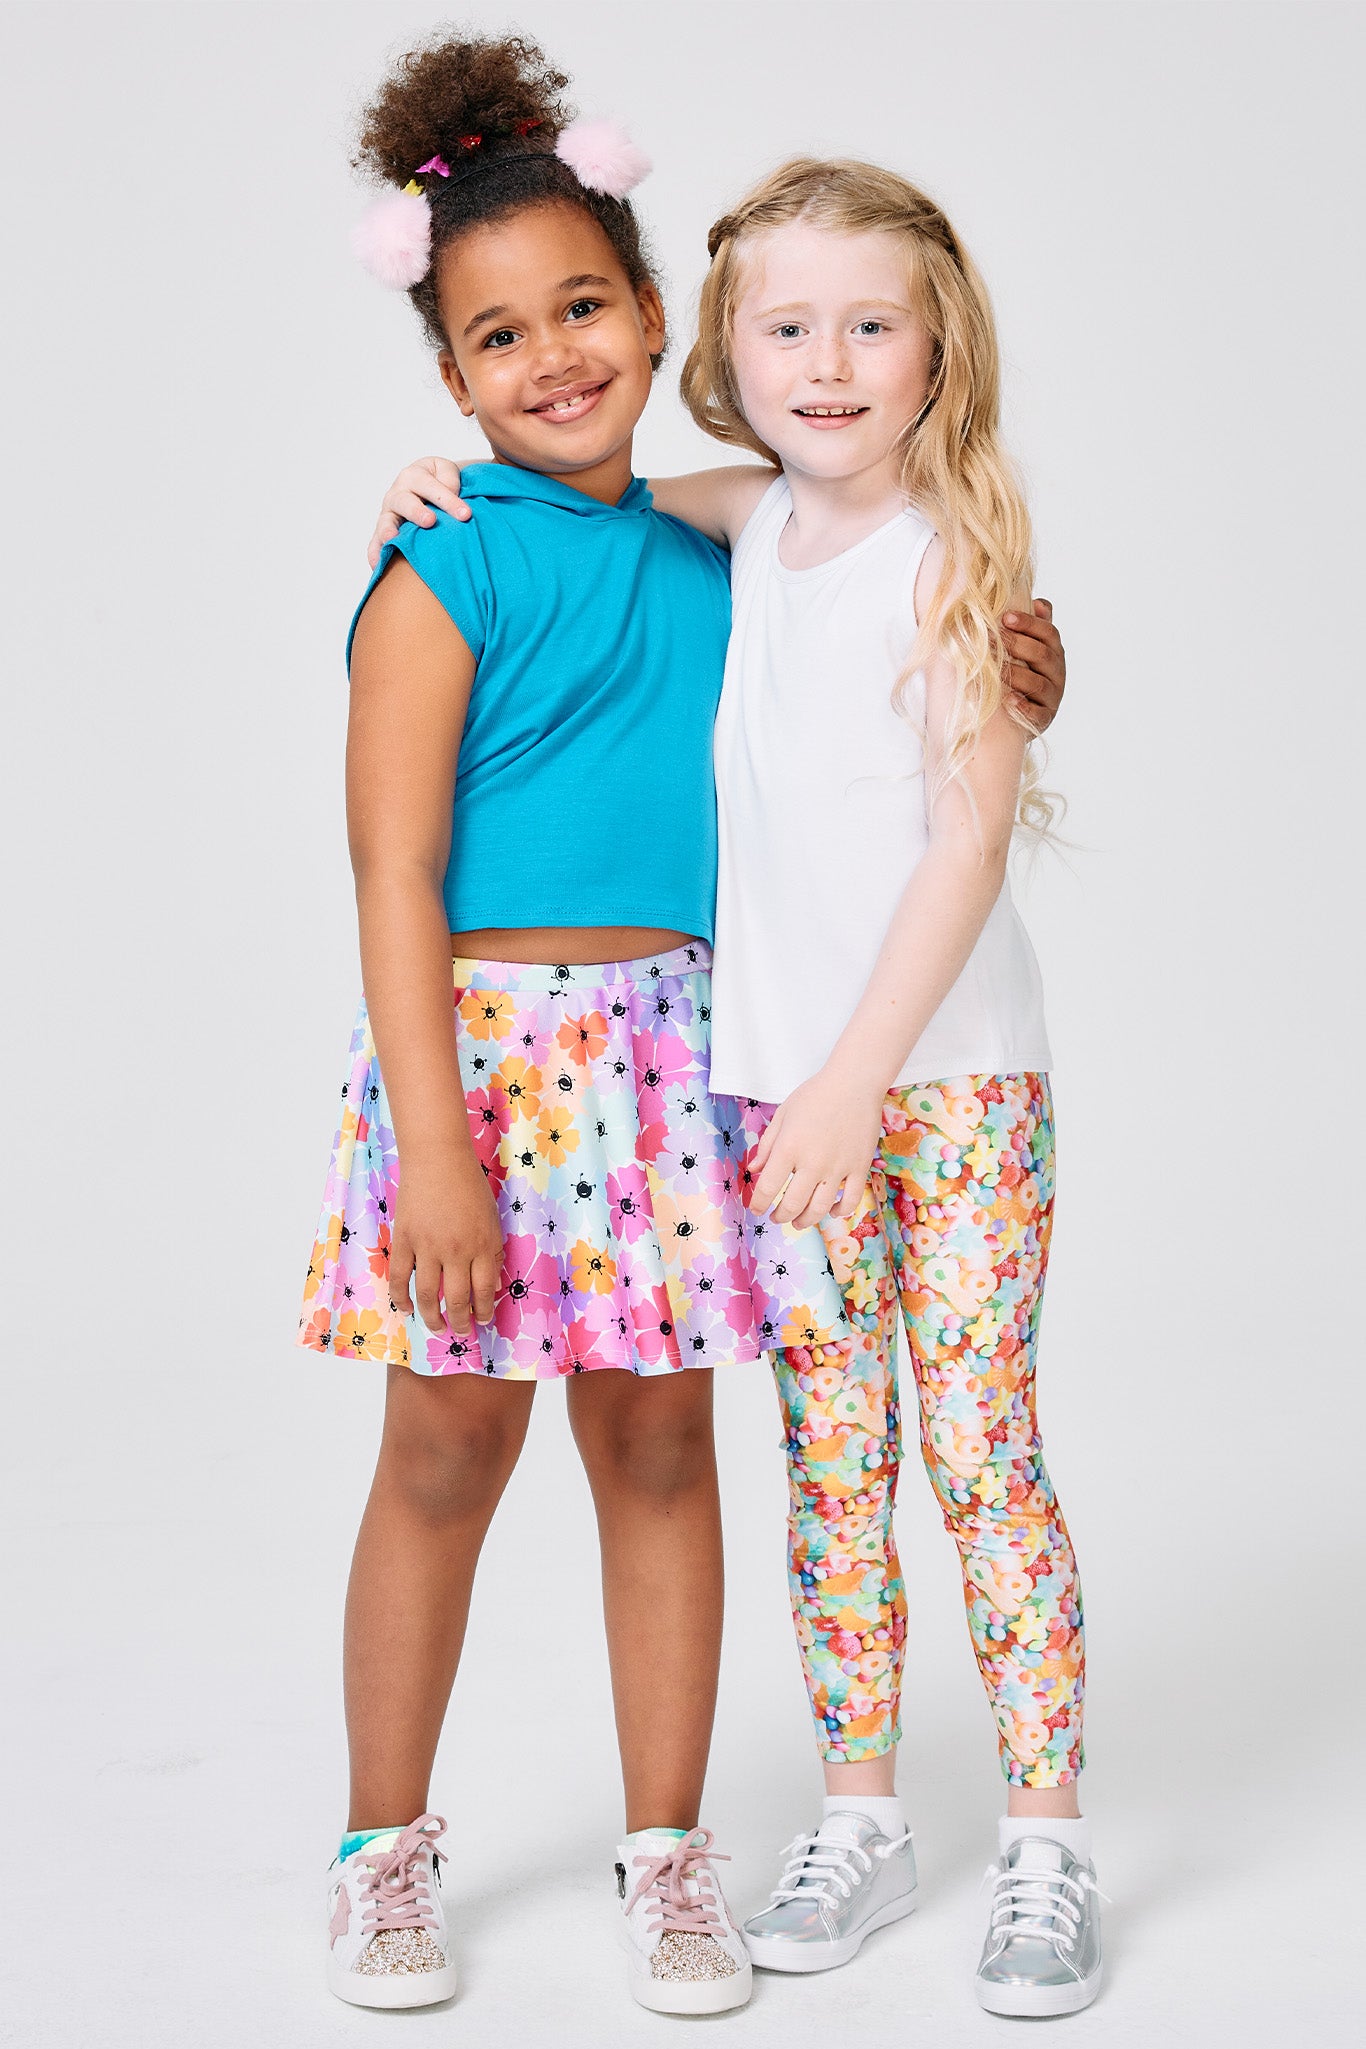 Terez Pastel Neon Tie Dye Girls Leggings (Size 6 left) – Mini Ruby